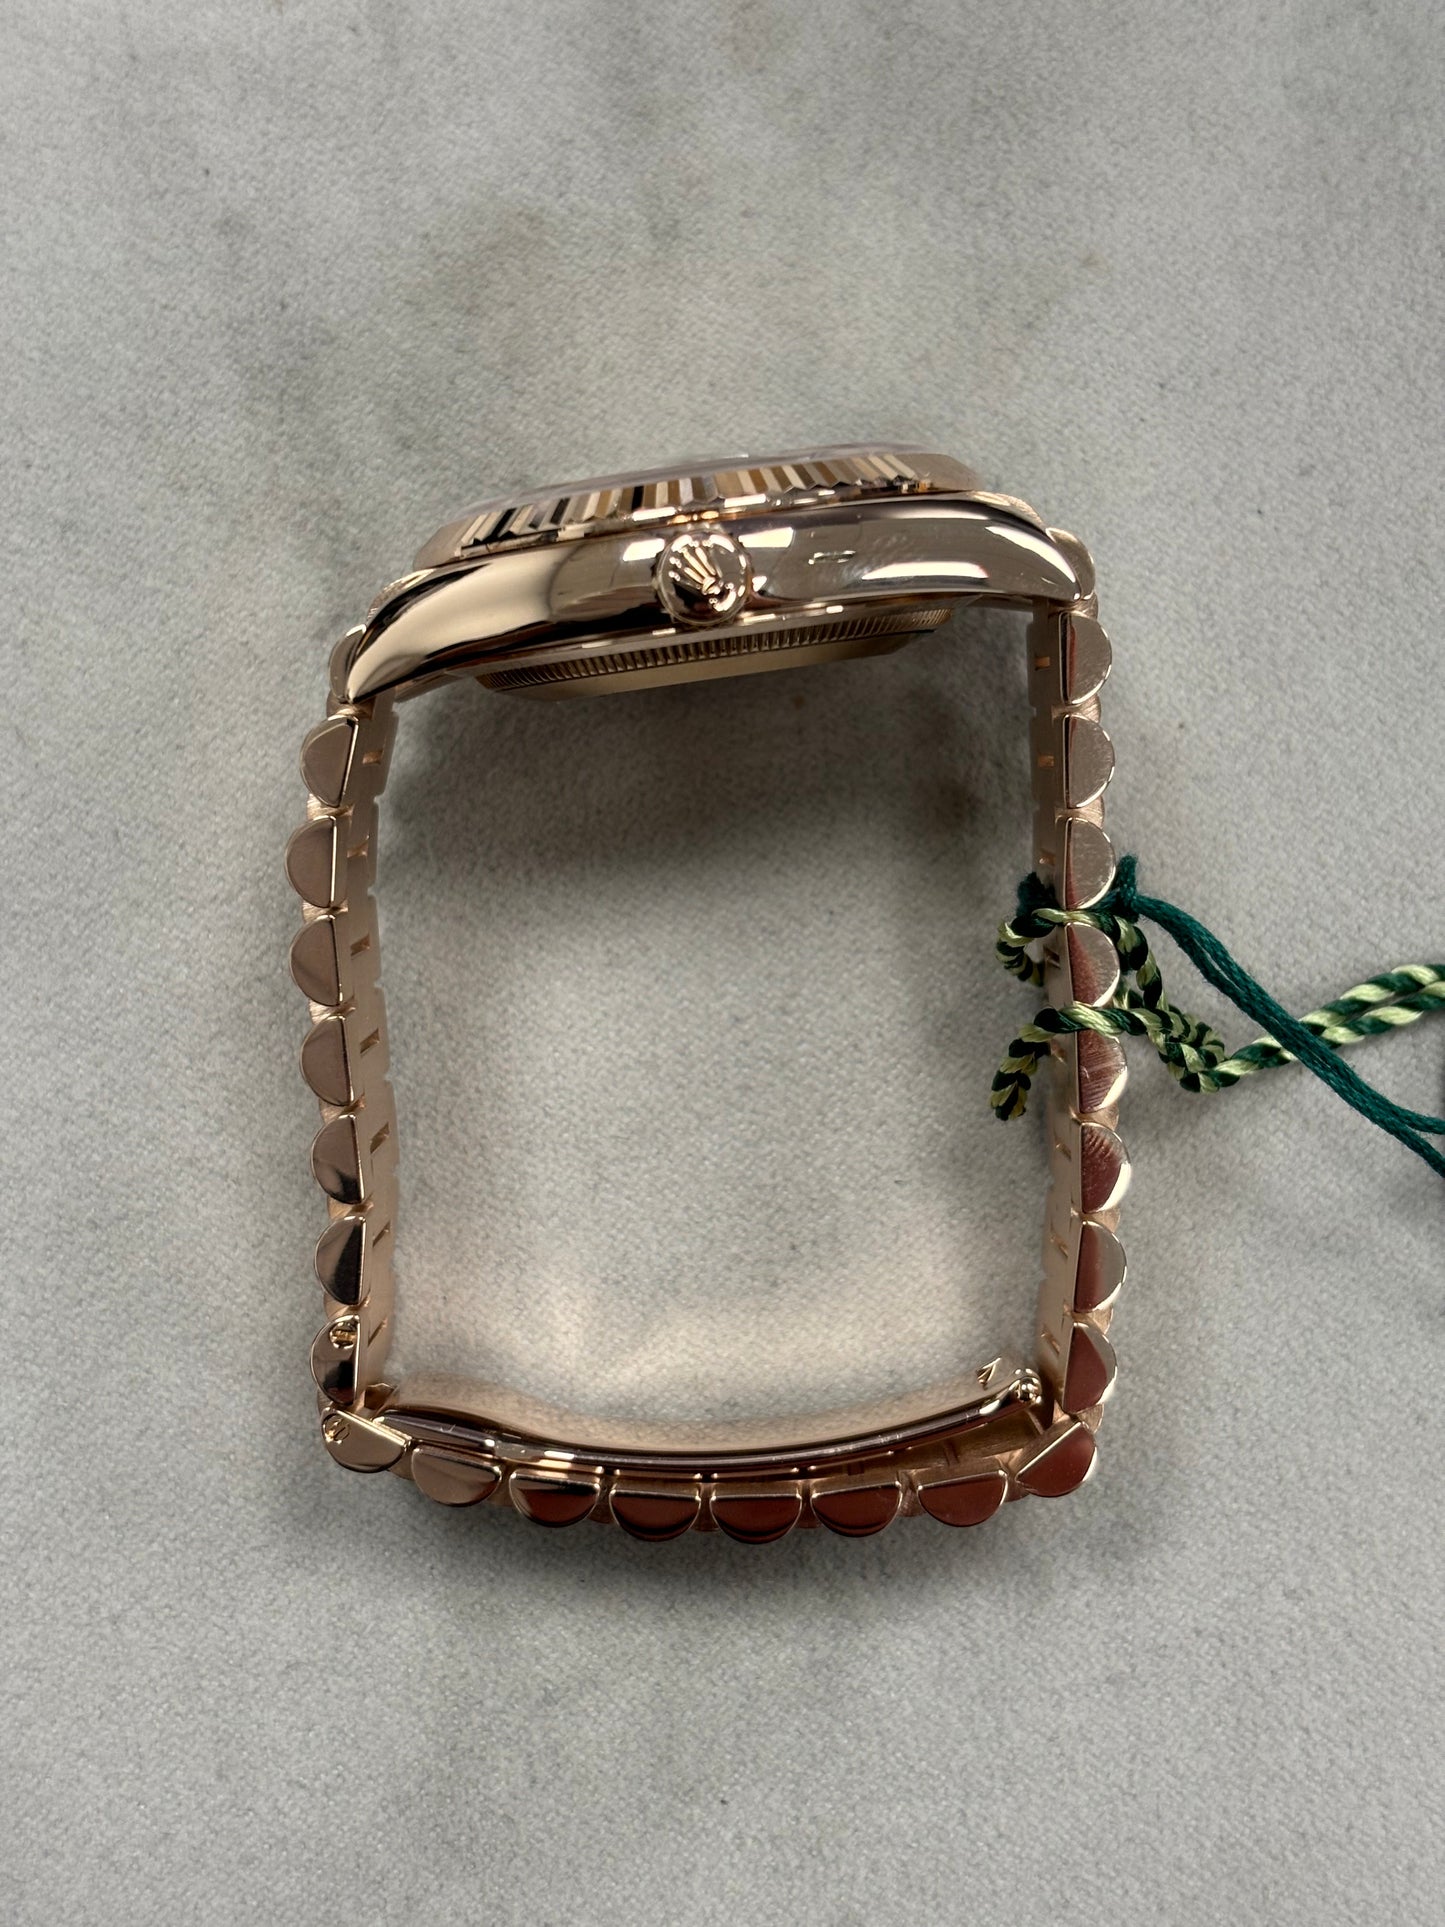 Rolex Day-Date Rose Gold 36mm Pink Sundust Diamond Dial Watch Reference# 128235 - Happy Jewelers Fine Jewelry Lifetime Warranty